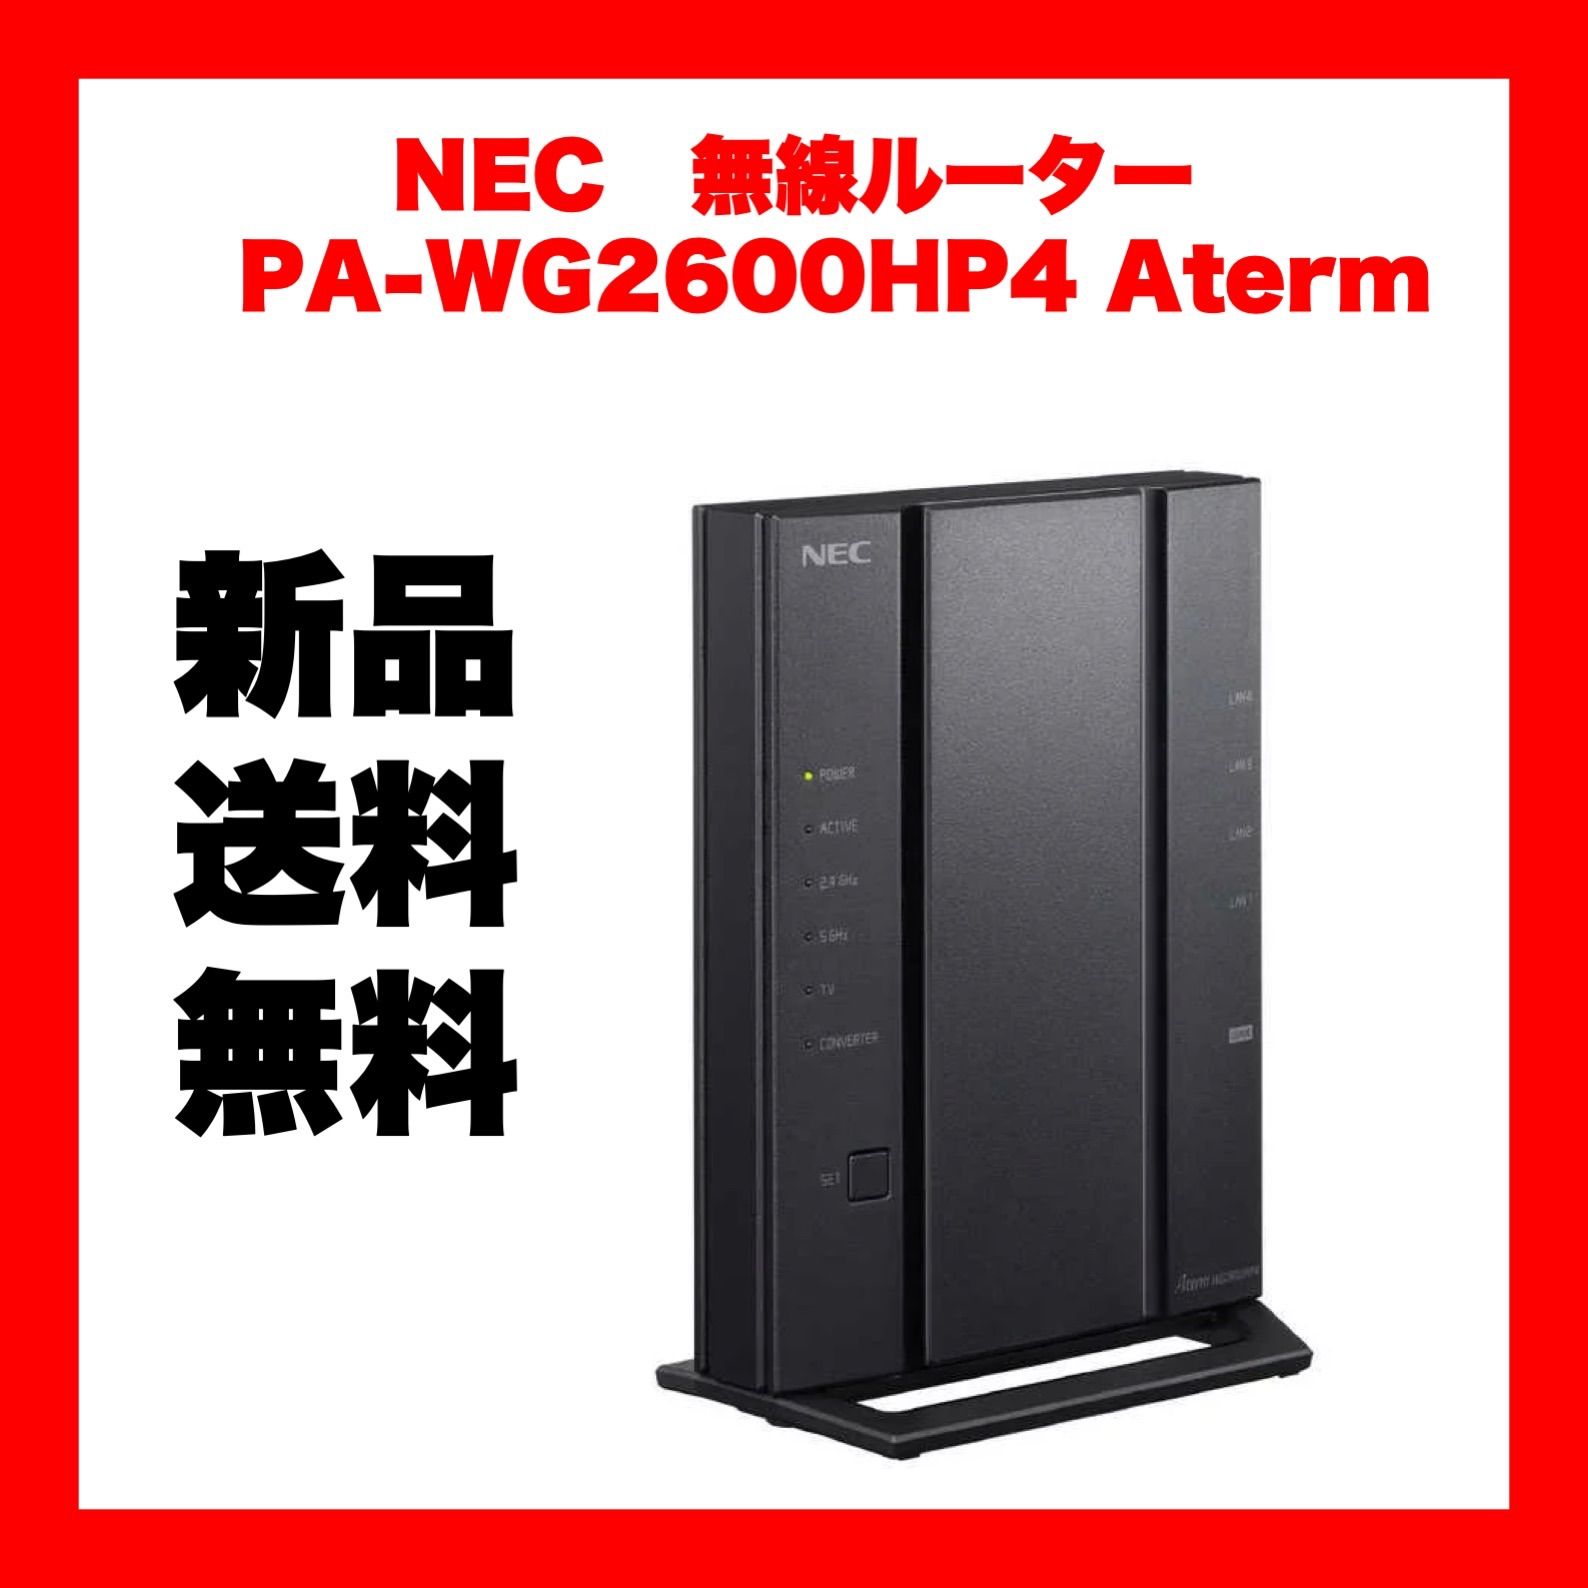 NEC 無線ルーター PA-WG2600HP4 Aterm [ac] - yosimune shop - メルカリ